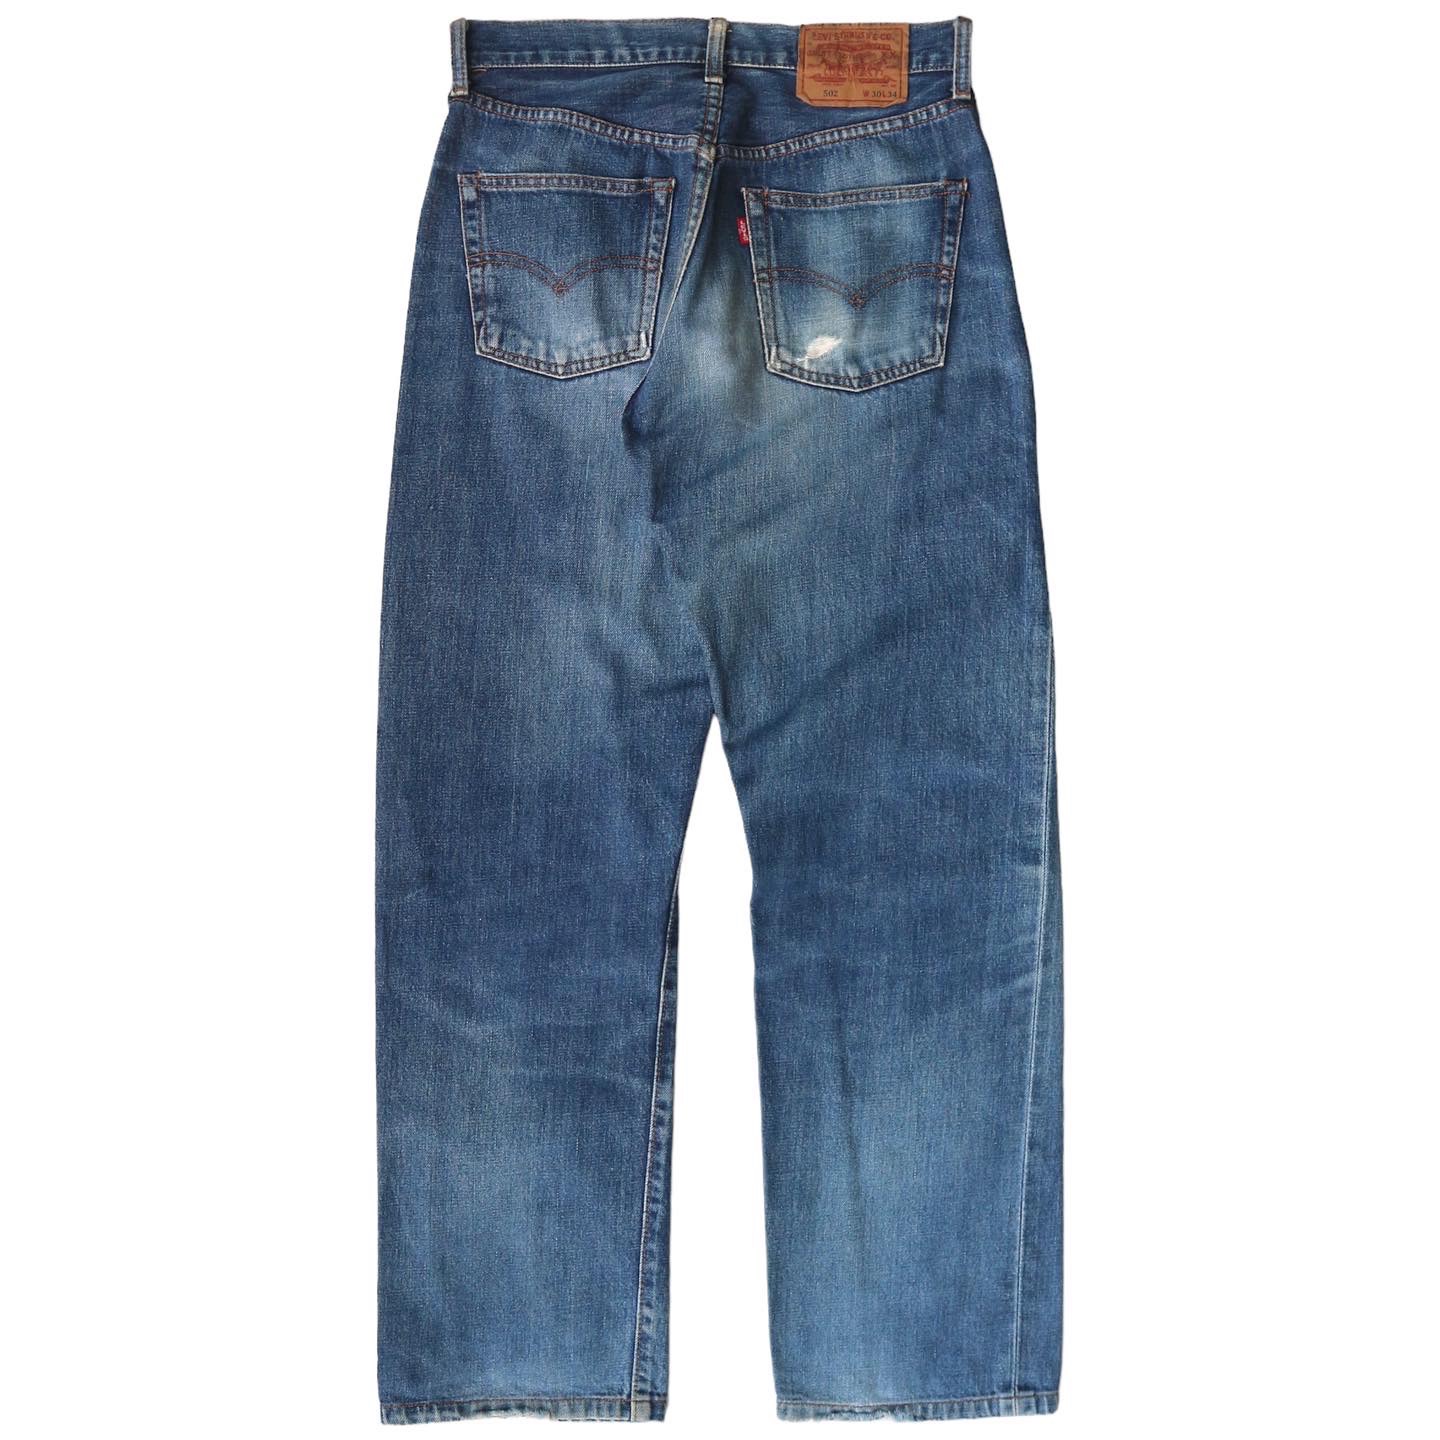 90s LEVI'S 502 Selvedge Denim Jeans Size 28 denimister